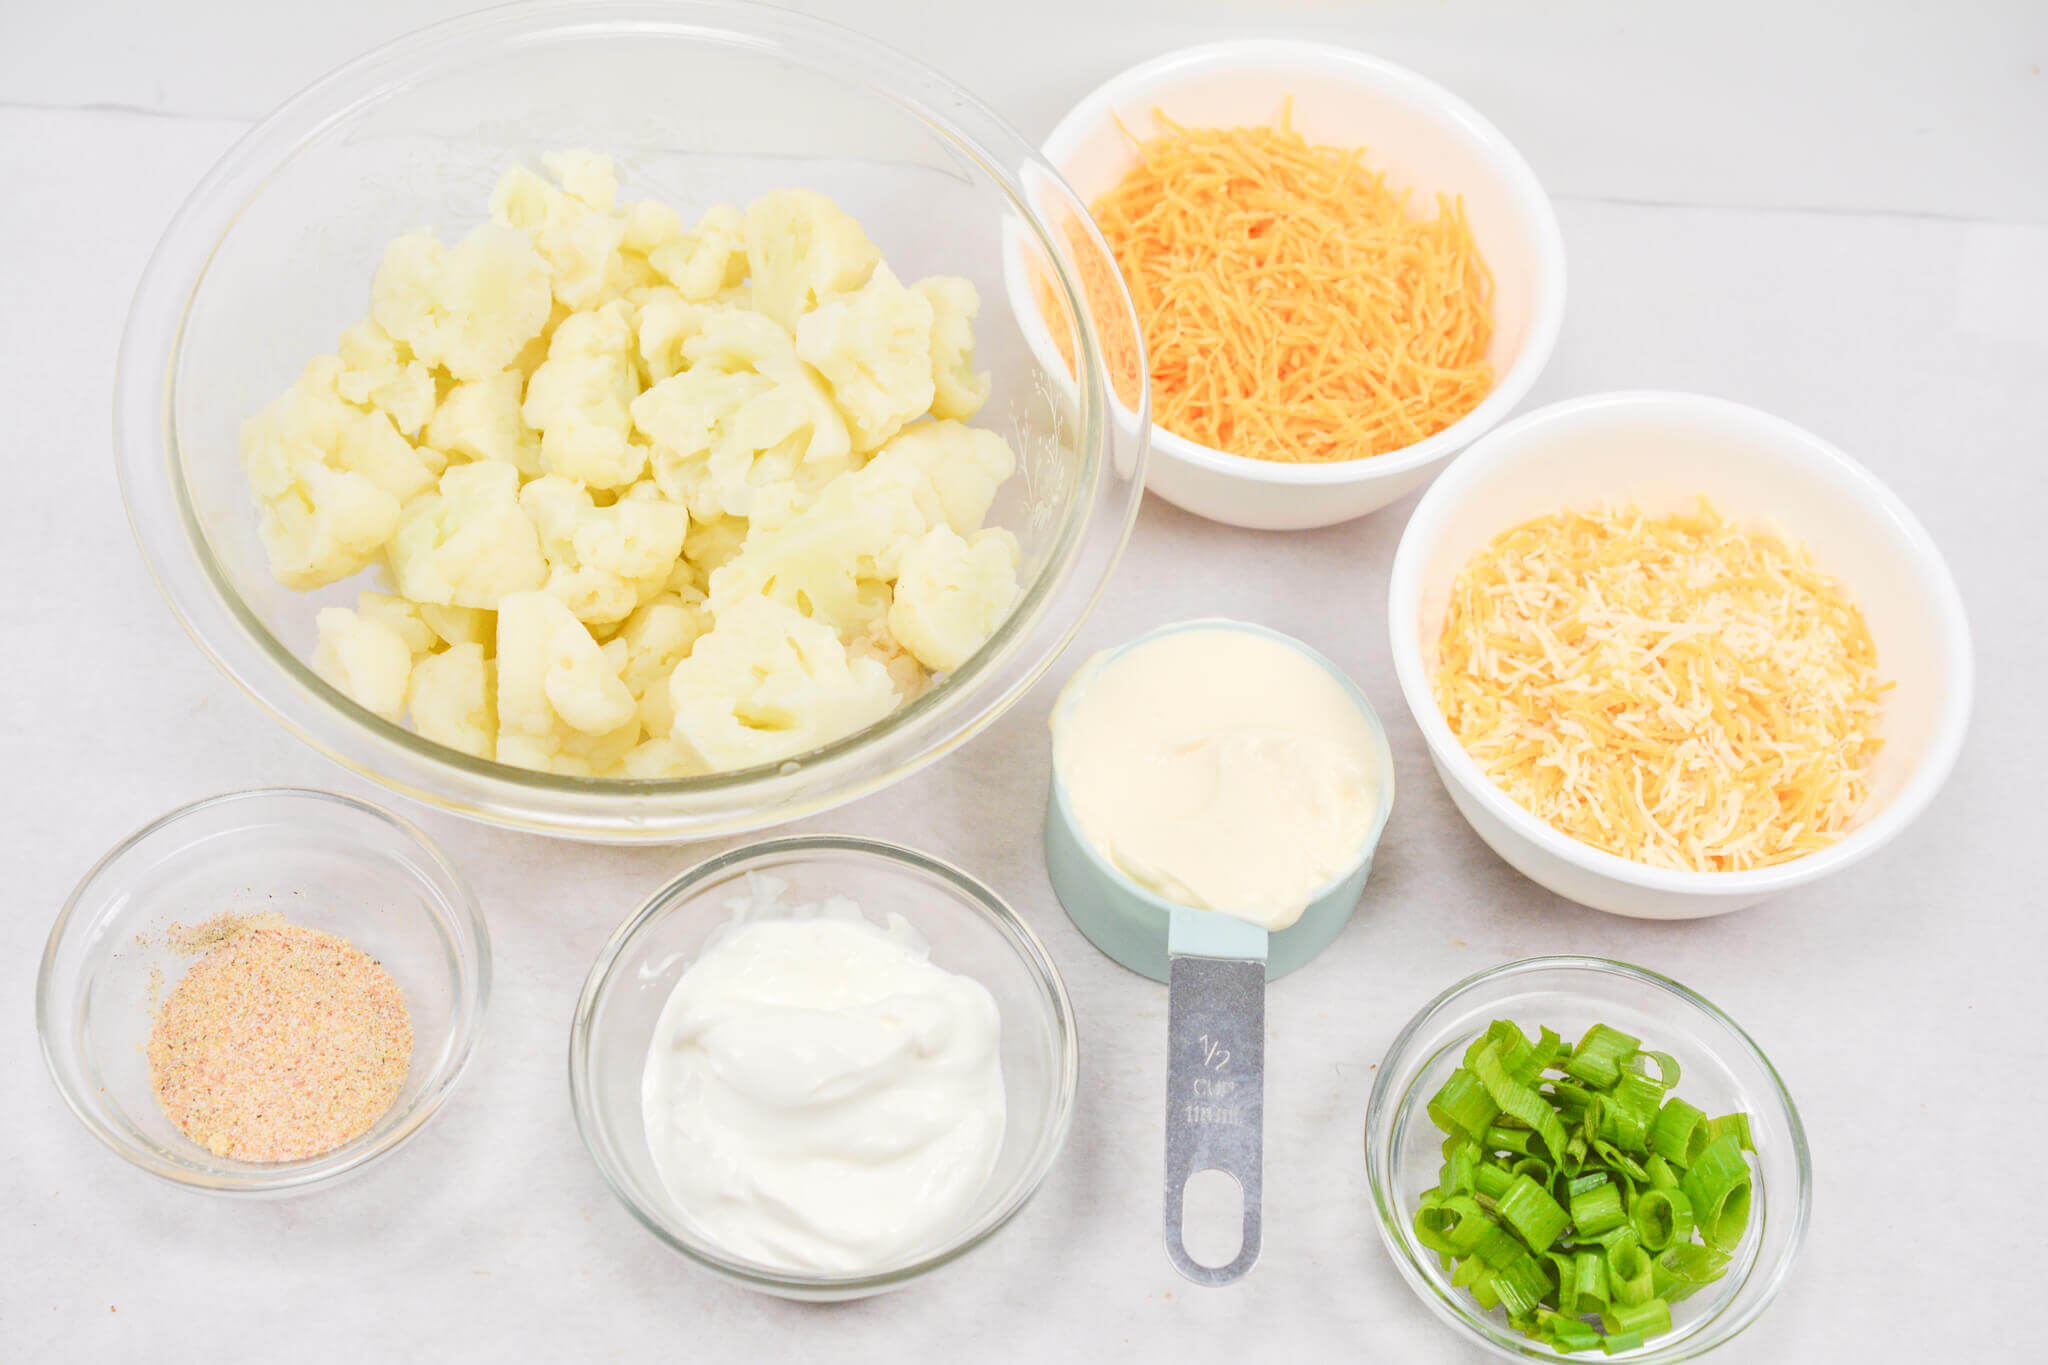 Cauliflower, cheese, vegetables to create bake.